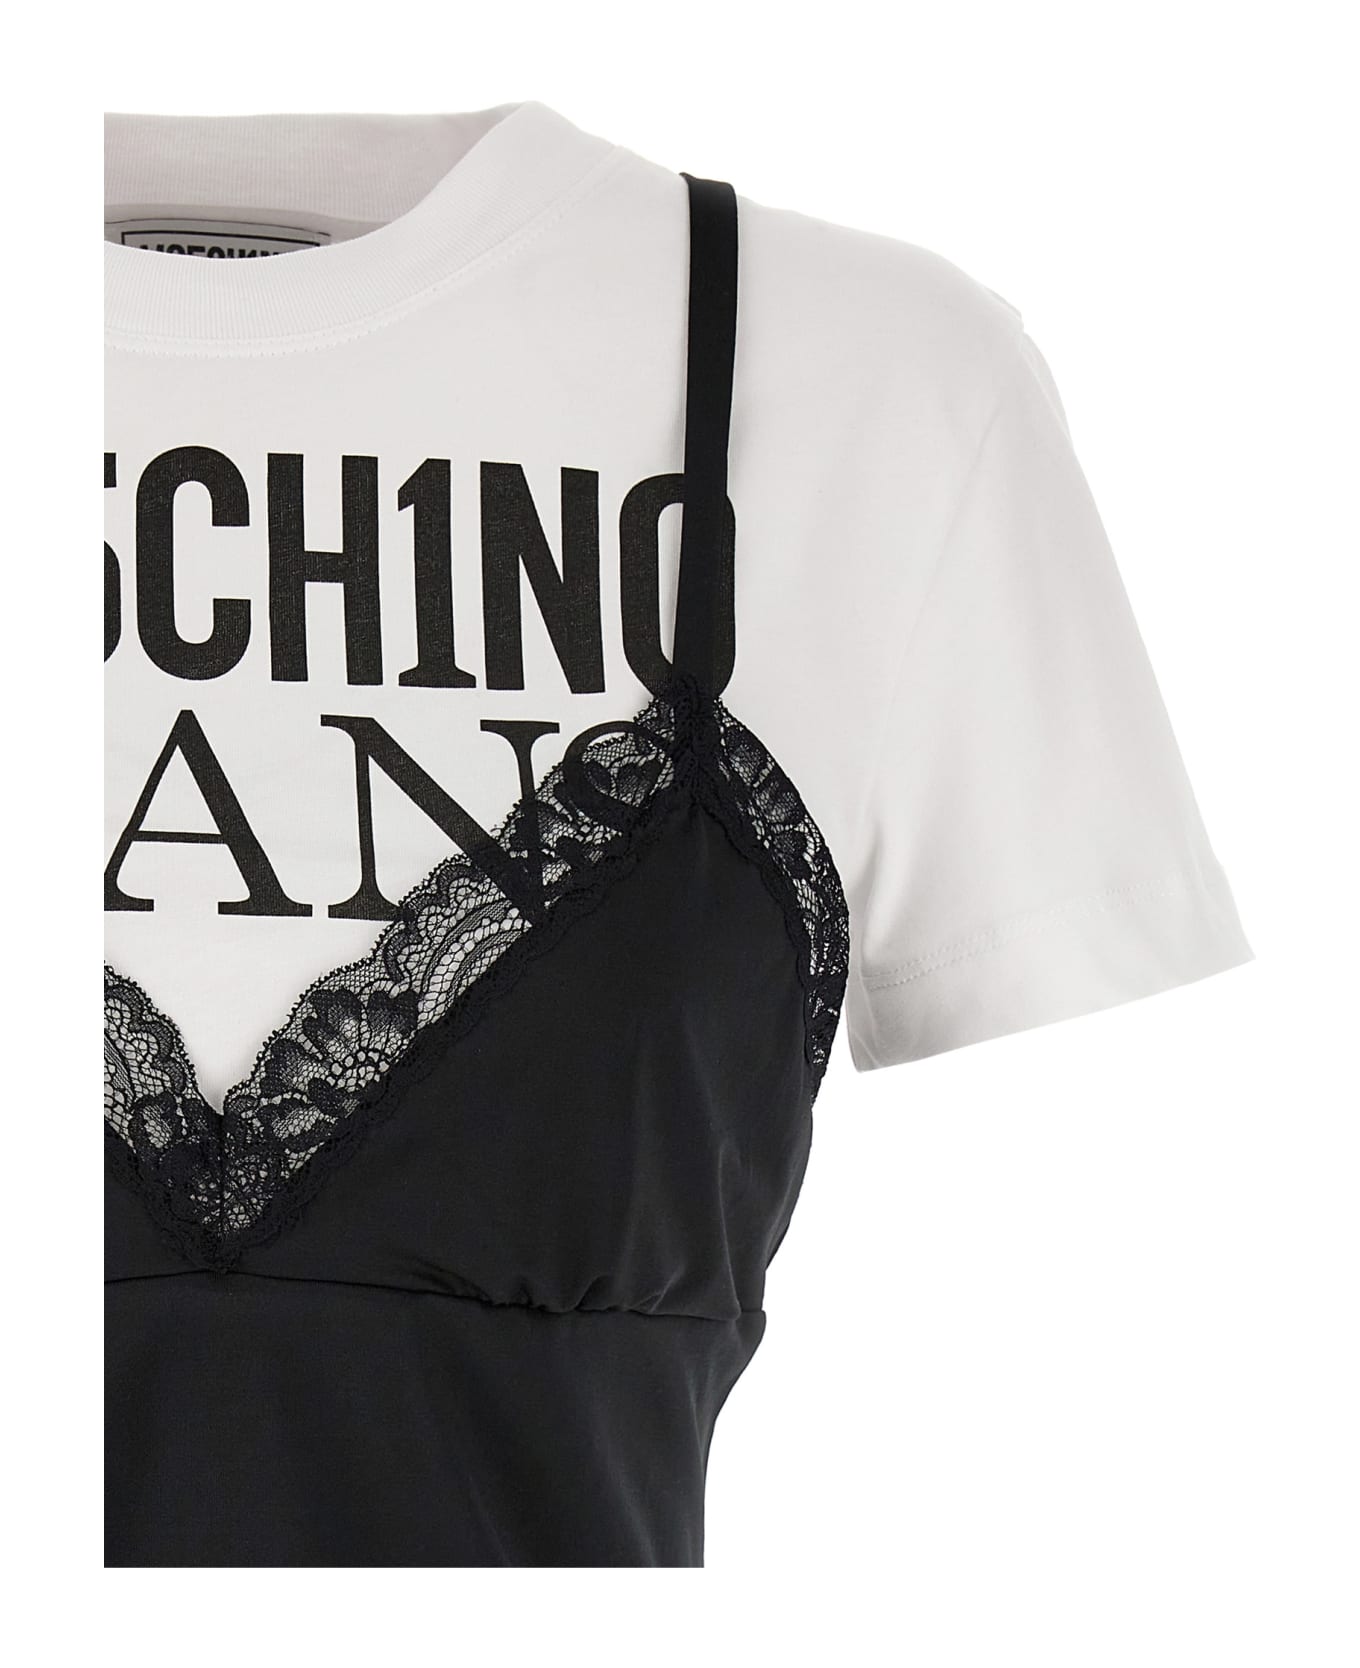 M05CH1N0 Jeans Top Insert T-shirt - White/Black